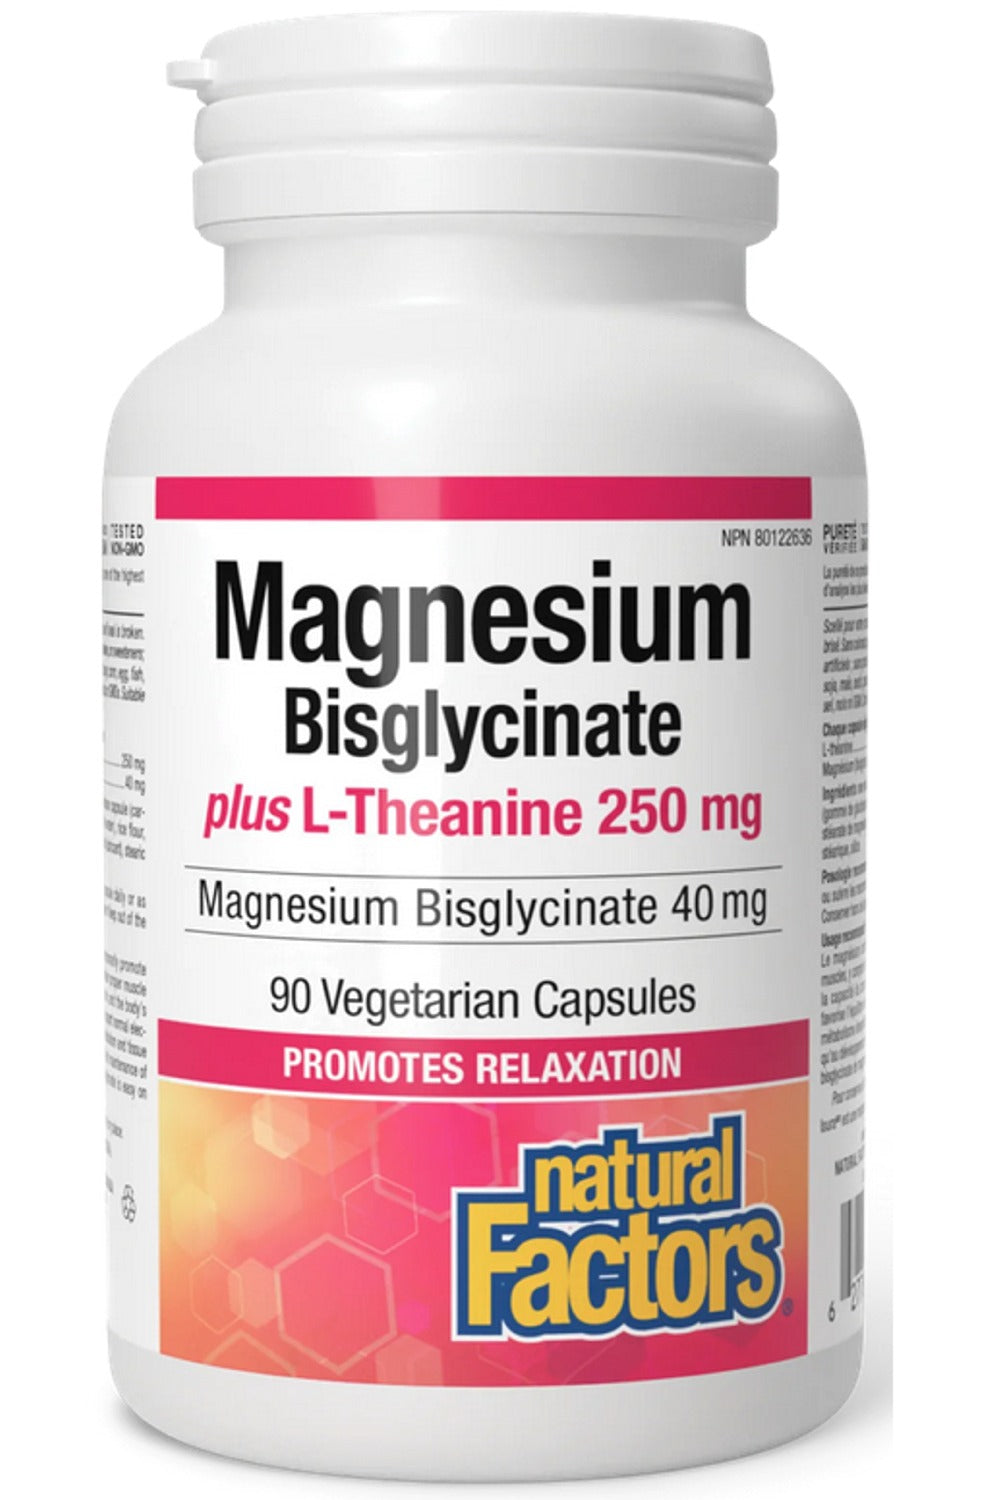 NATURAL FACTORS Magnesium Bisglycinate 100 mg plus L-Theanine 125 mg (90 vcaps)